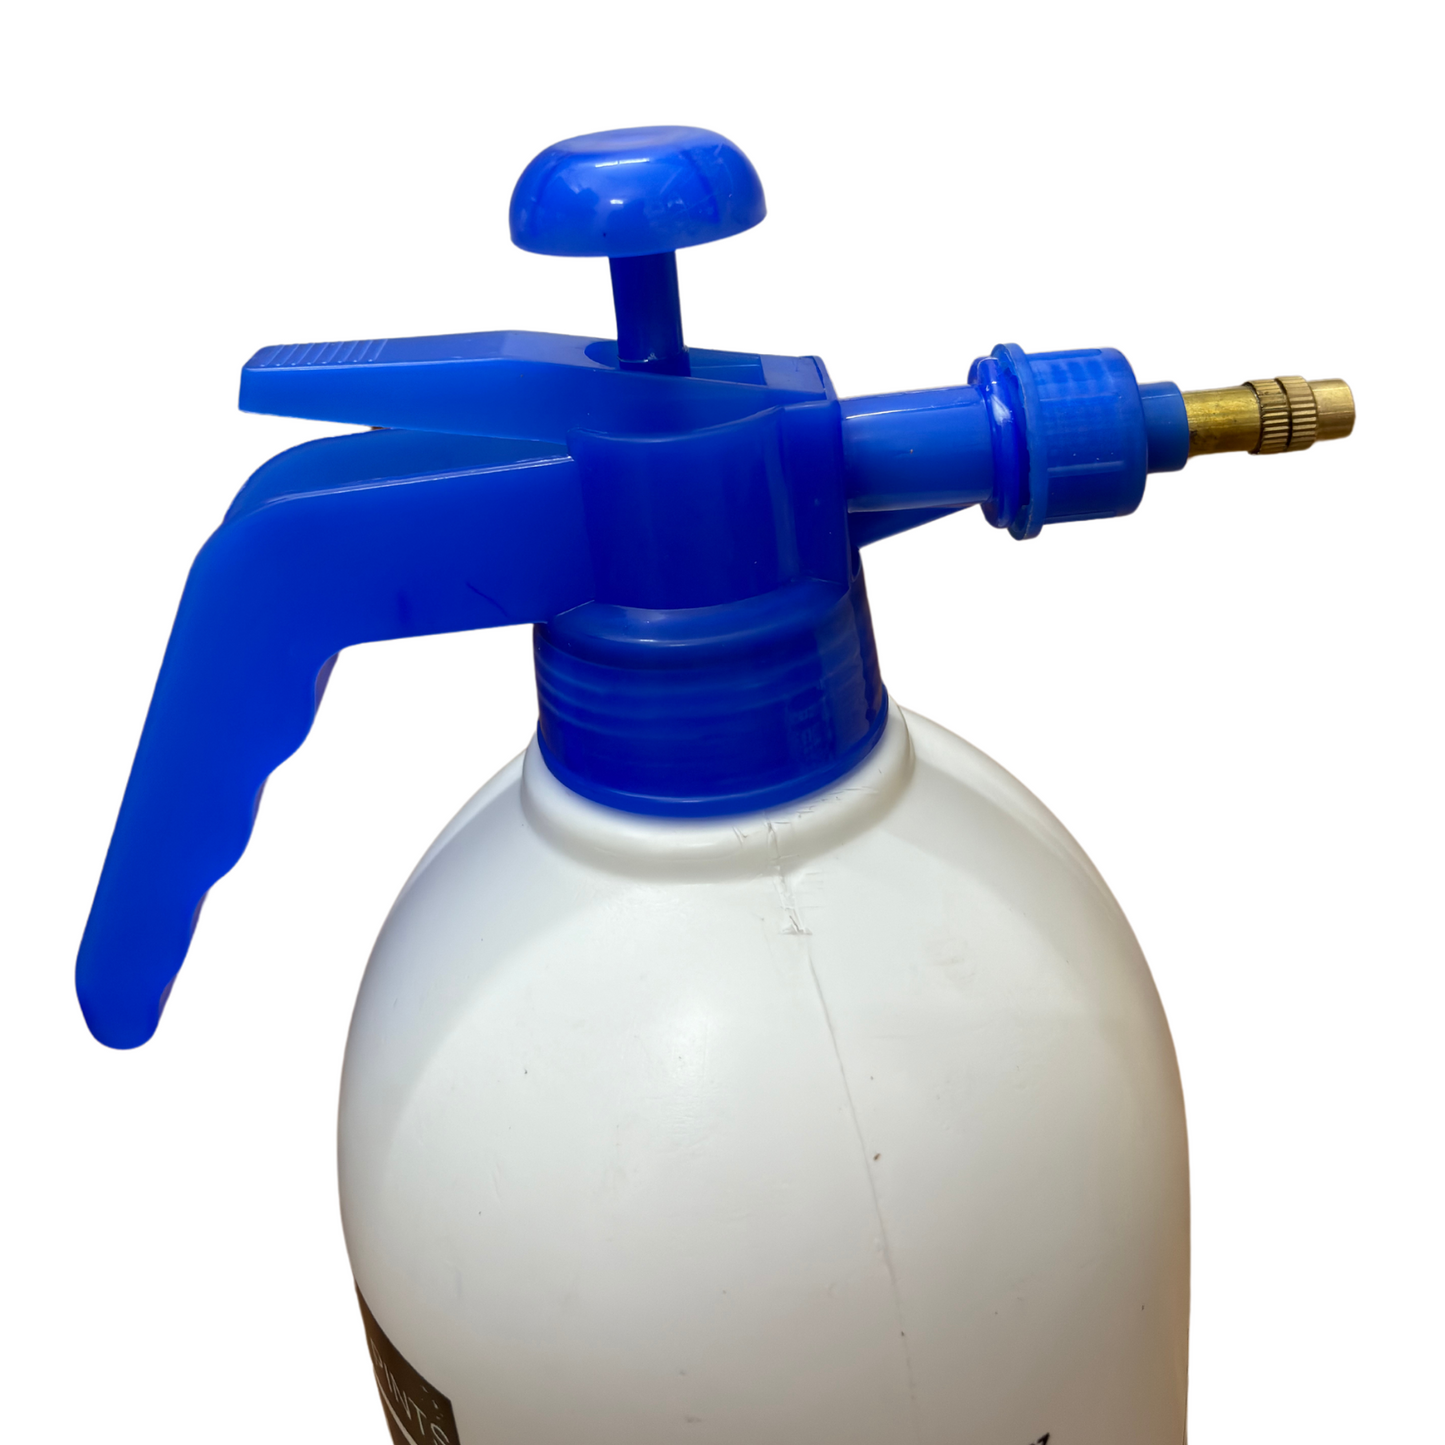 Water Spinkler Bottle 02 LTR